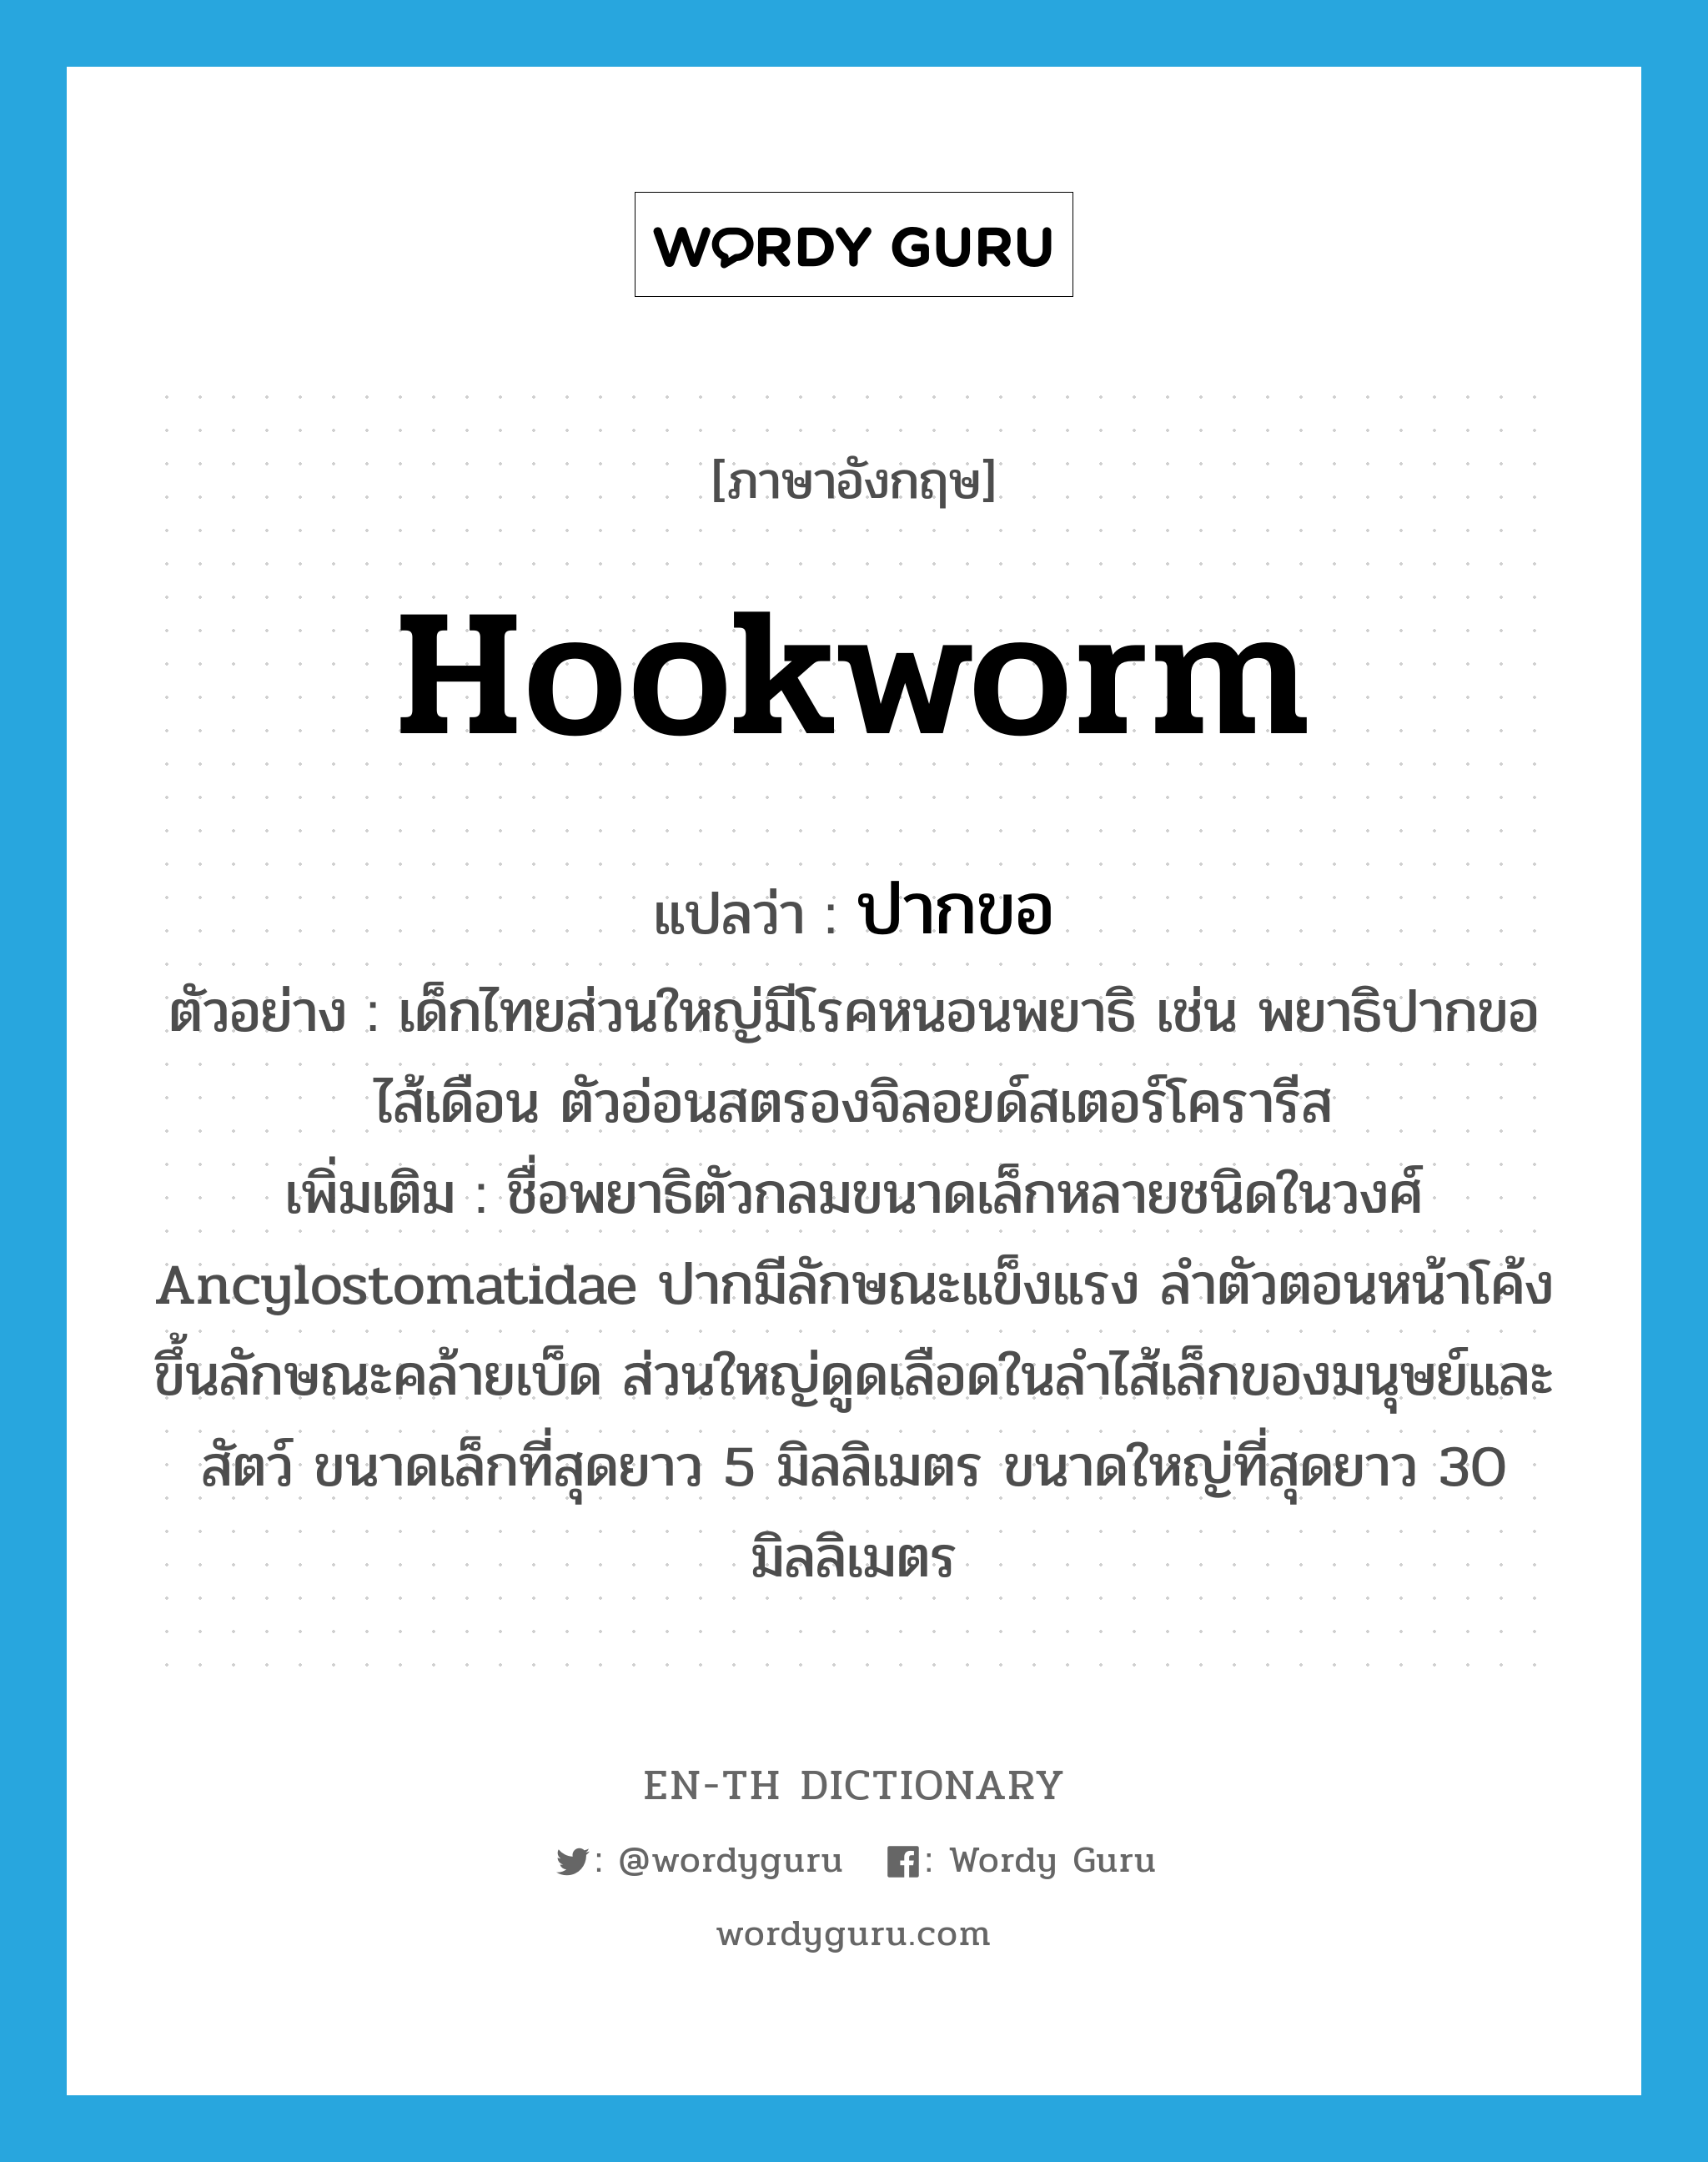 hookworm แปลว่า?, คำศัพท์ภาษาอังกฤษ hookworm แปลว่า ปากขอ ประเภท N ตัวอย่าง เด็กไทยส่วนใหญ่มีโรคหนอนพยาธิ เช่น พยาธิปากขอ ไส้เดือน ตัวอ่อนสตรองจิลอยด์สเตอร์โครารีส เพิ่มเติม ชื่อพยาธิตัวกลมขนาดเล็กหลายชนิดในวงศ์ Ancylostomatidae ปากมีลักษณะแข็งแรง ลำตัวตอนหน้าโค้งขึ้นลักษณะคล้ายเบ็ด ส่วนใหญ่ดูดเลือดในลำไส้เล็กของมนุษย์และสัตว์ ขนาดเล็กที่สุดยาว 5 มิลลิเมตร ขนาดใหญ่ที่สุดยาว 30 มิลลิเมตร หมวด N